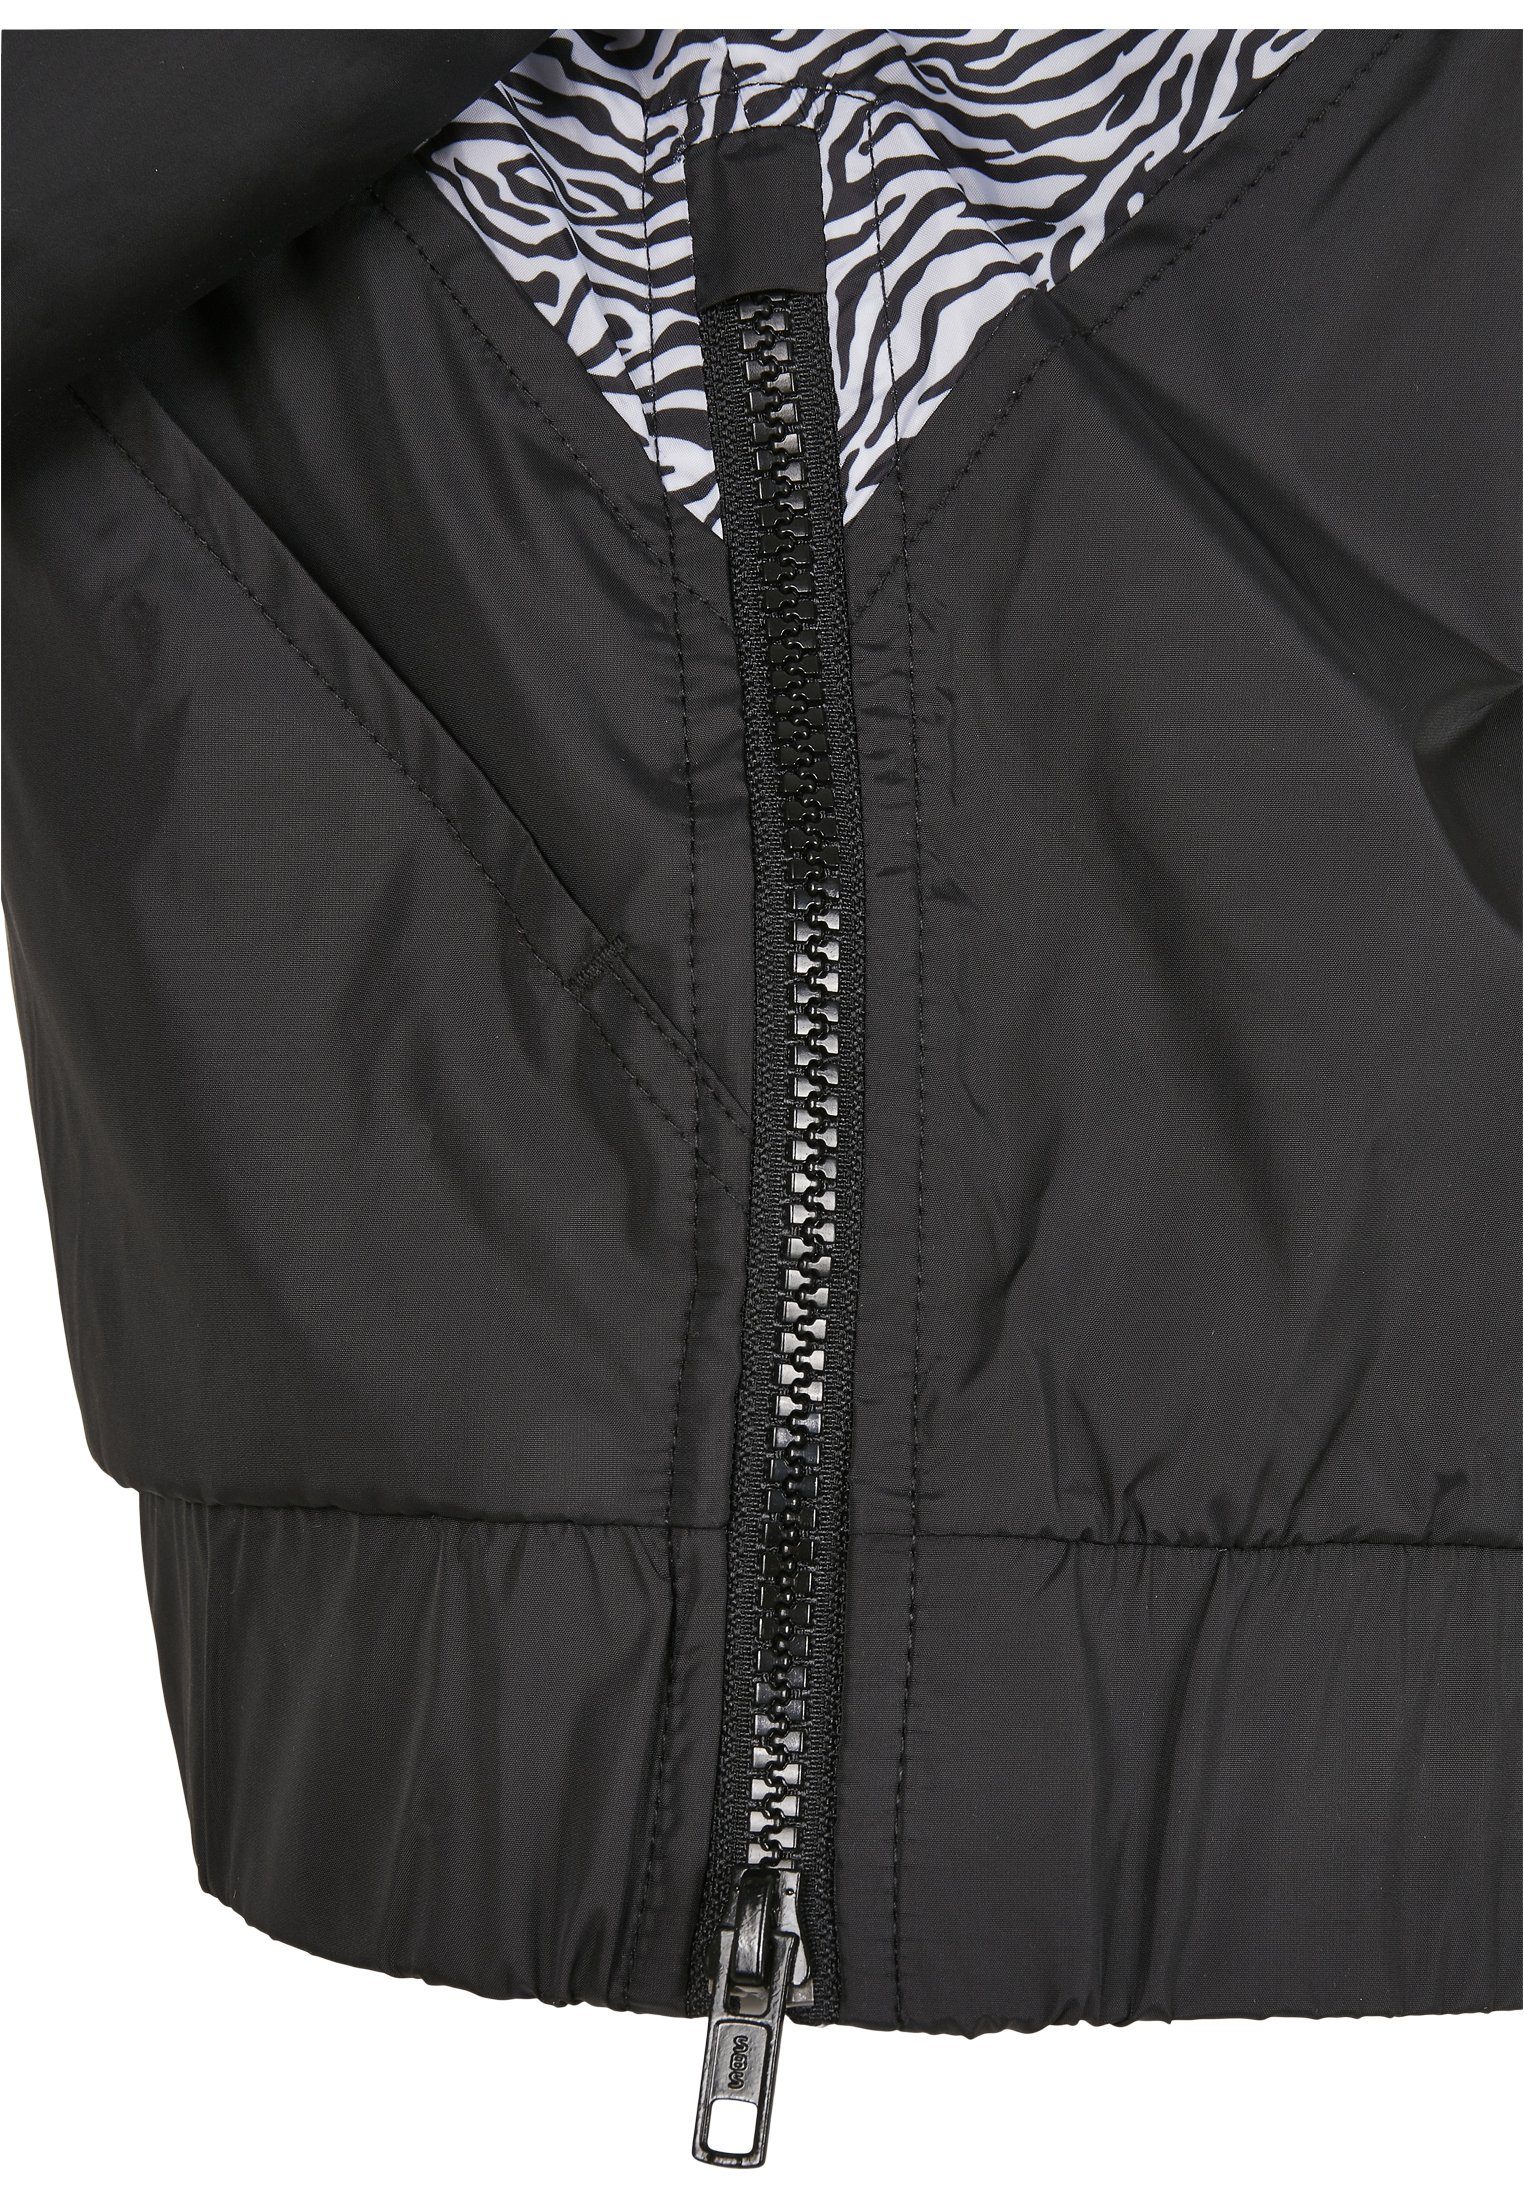 Damen black/zebra Over Ladies Mixed Outdoorjacke (1-St) AOP URBAN CLASSICS Jacket Pull